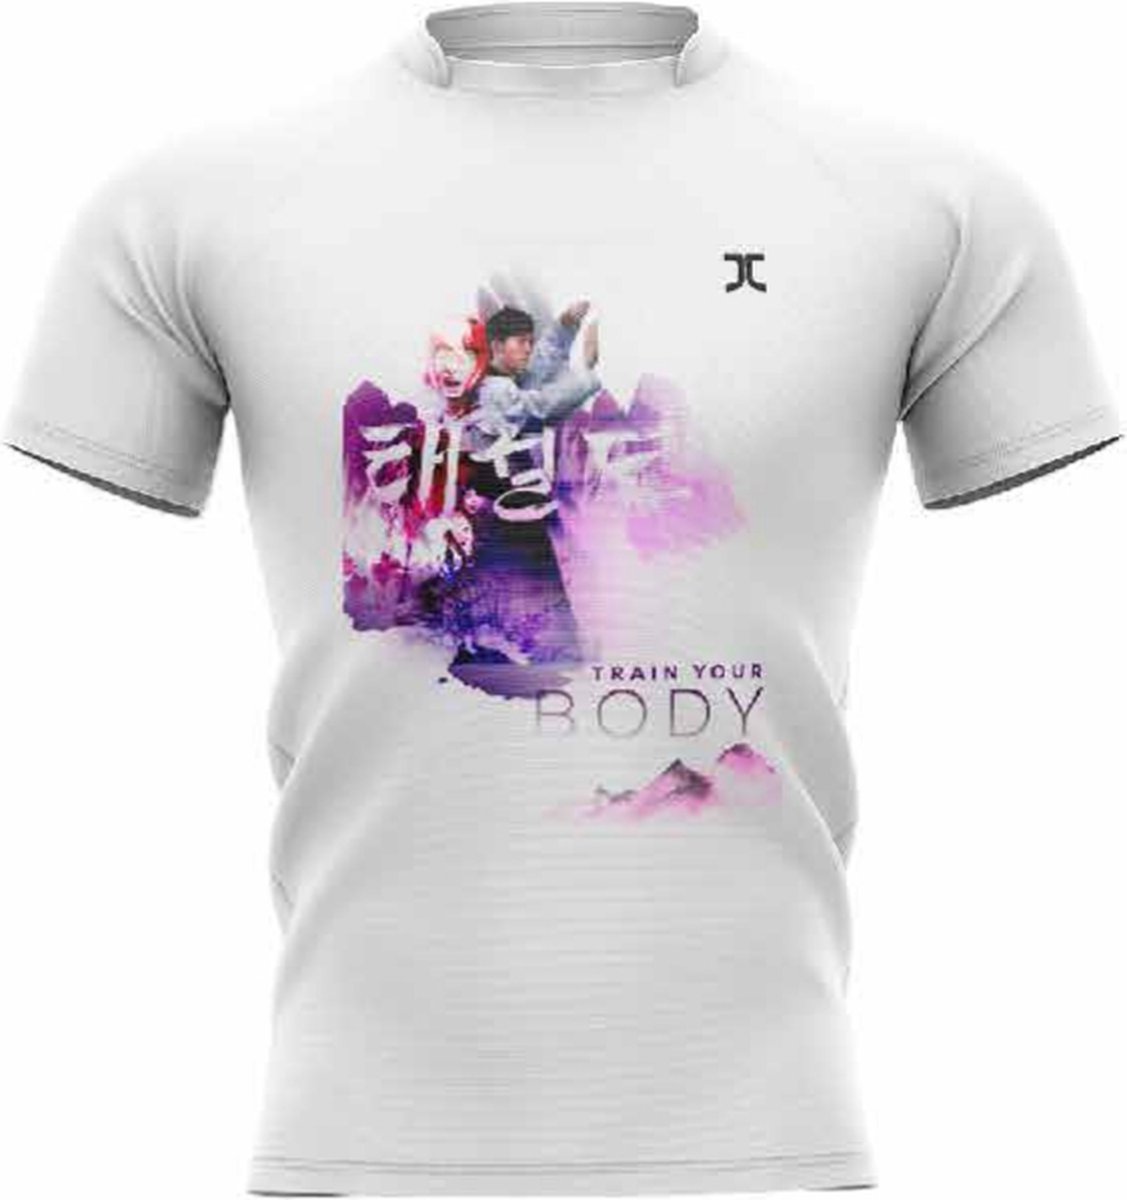 Trainingshirt JC Taekwondo Train your Body | wit-paars (Maat: XL)